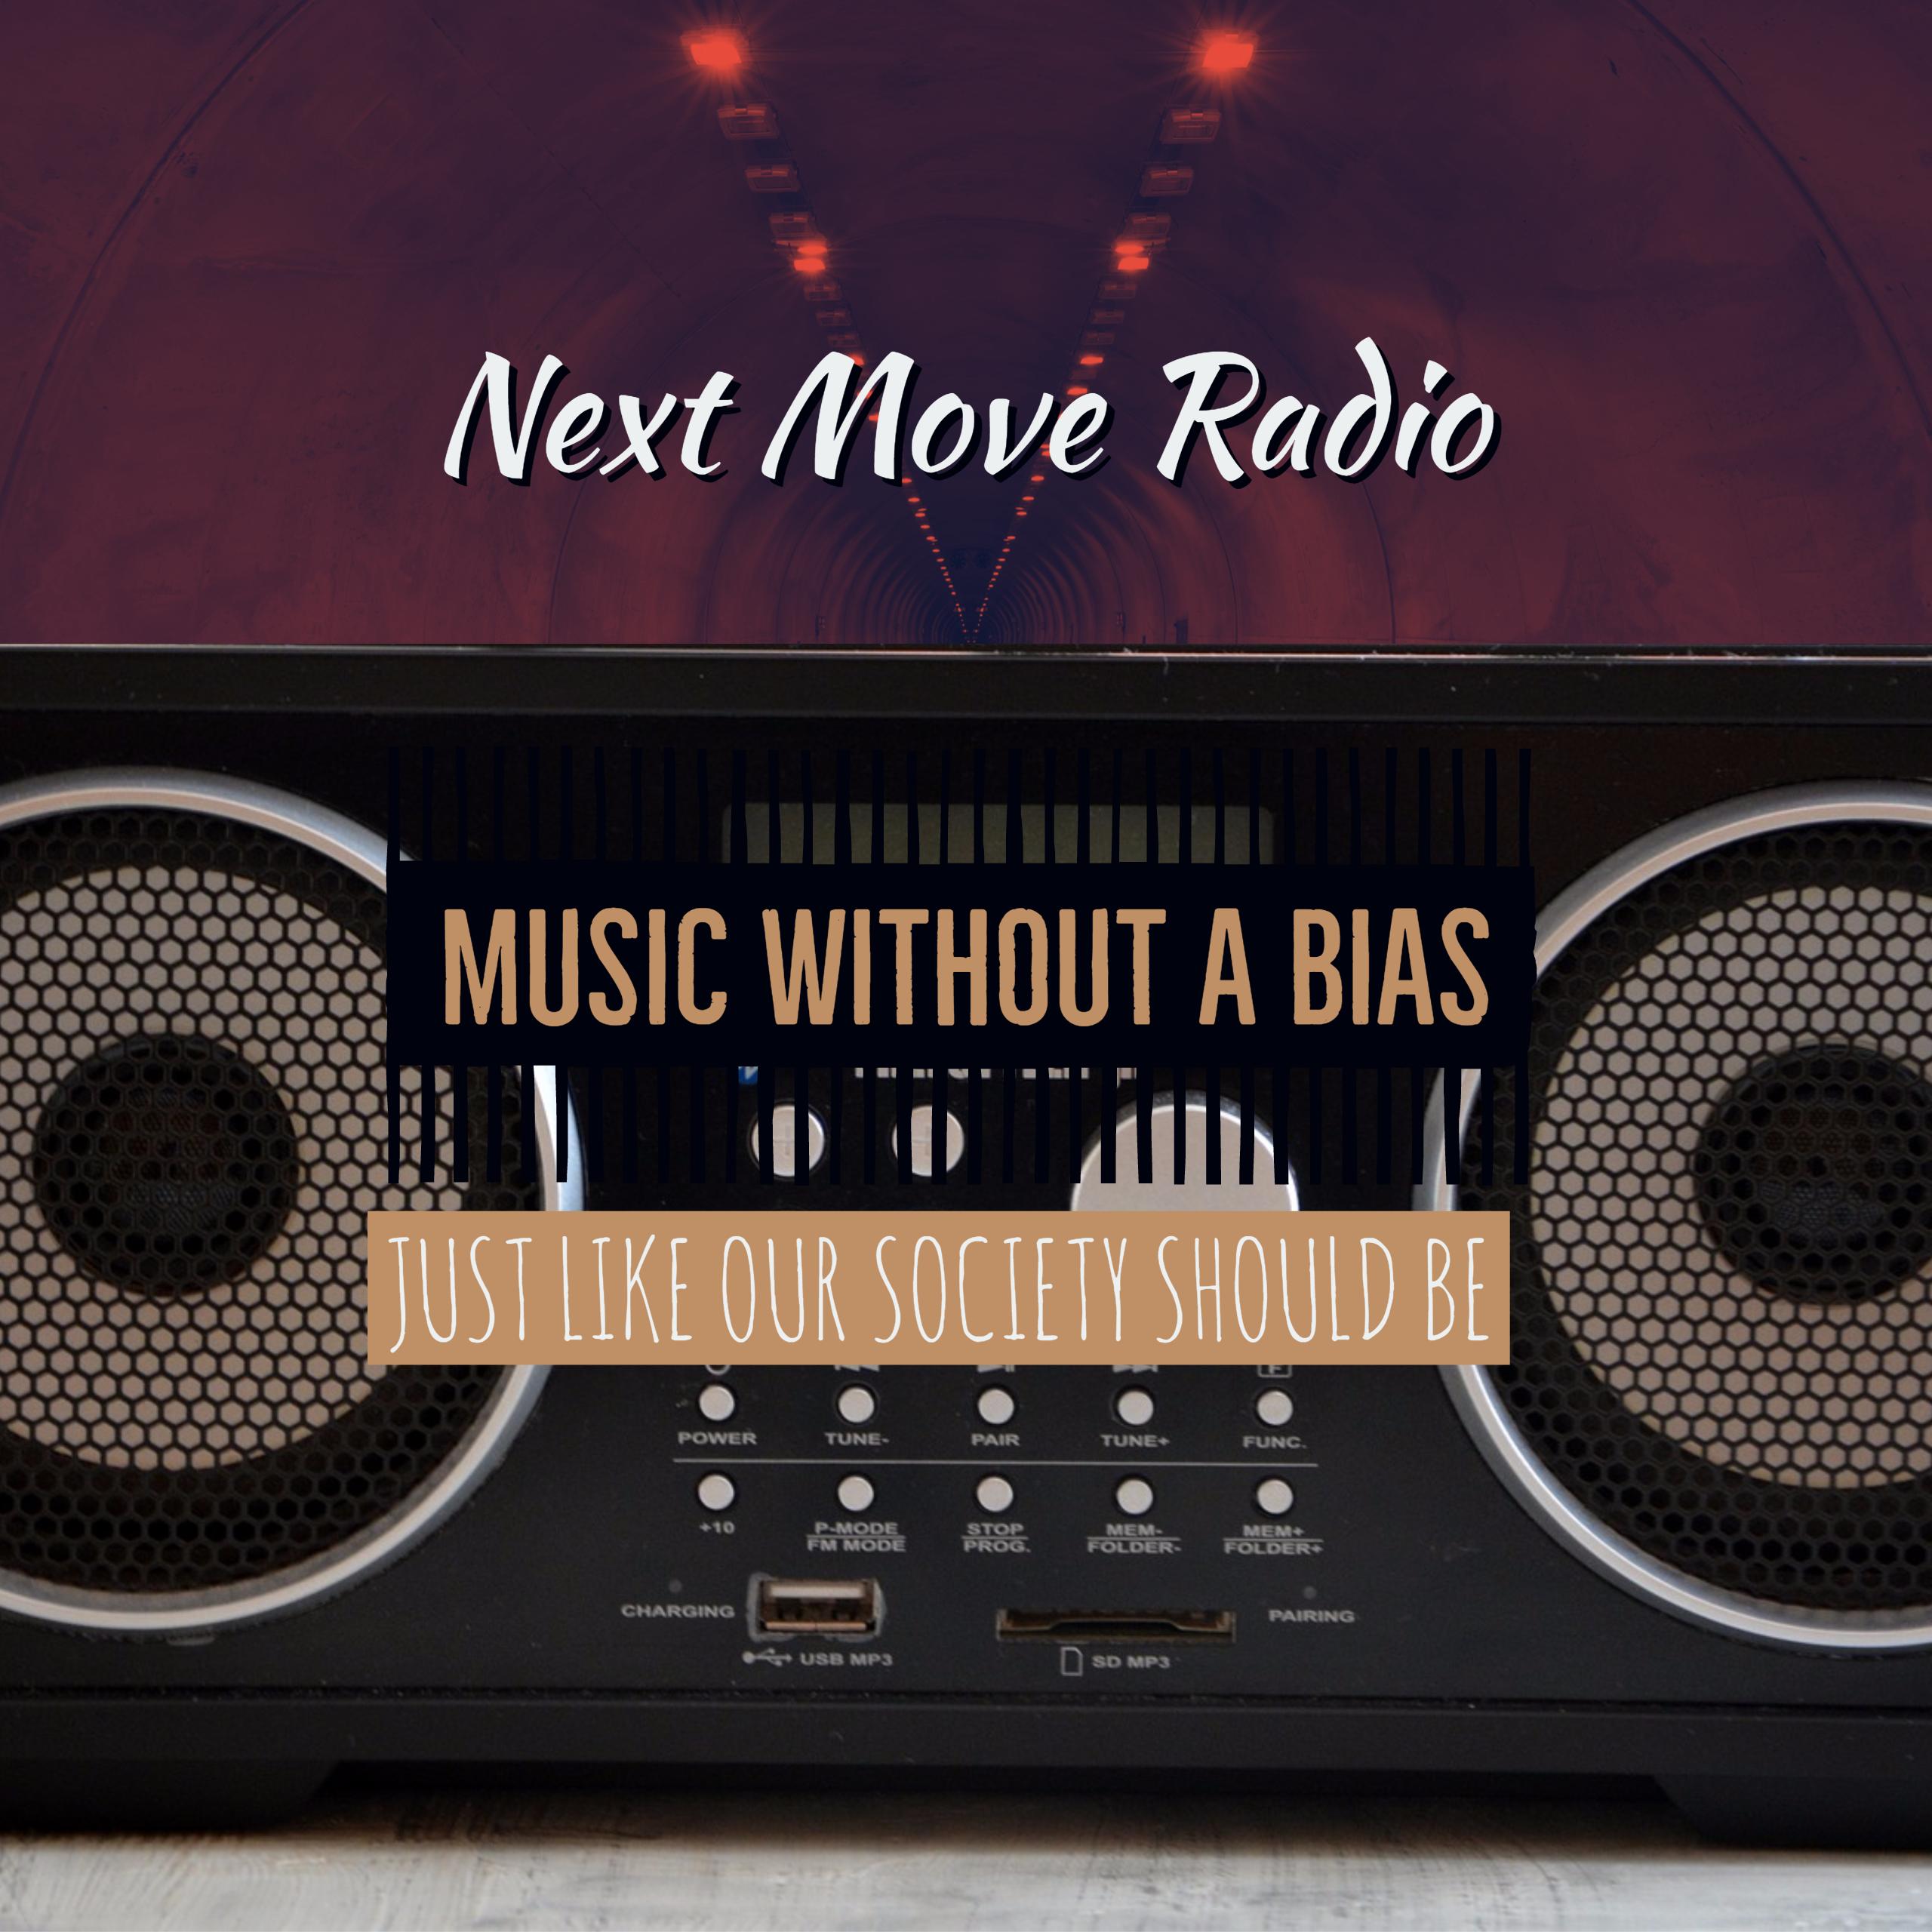 The logo for Next Move Radio